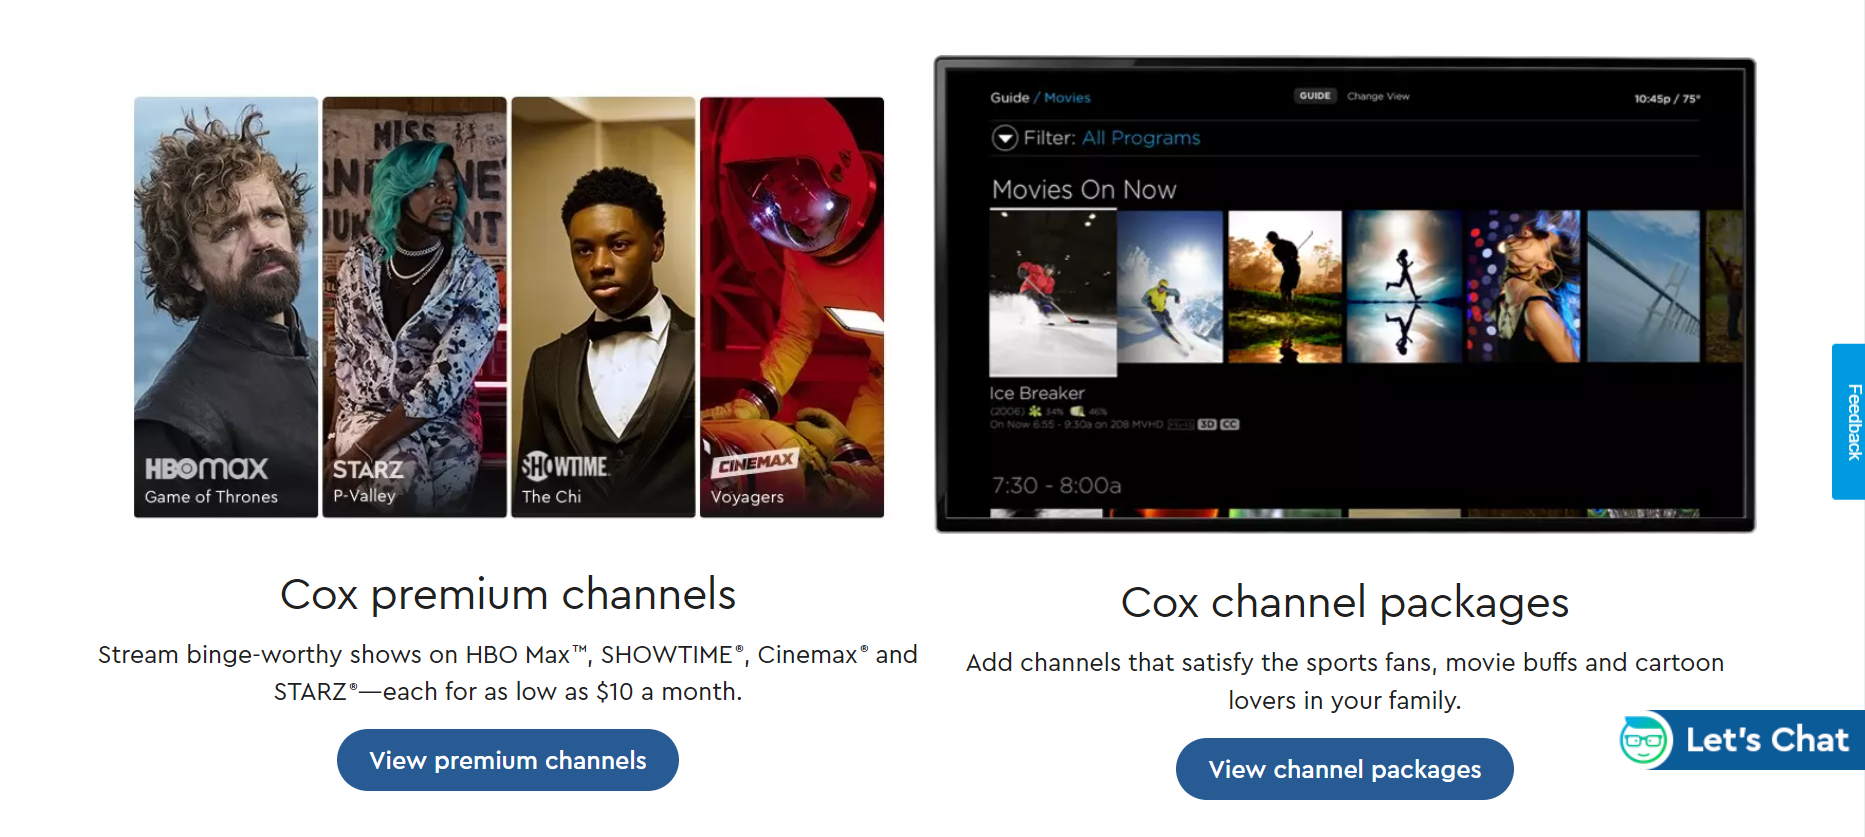 Cox Contour Subscription : How To Watch Cox Contour On Roku